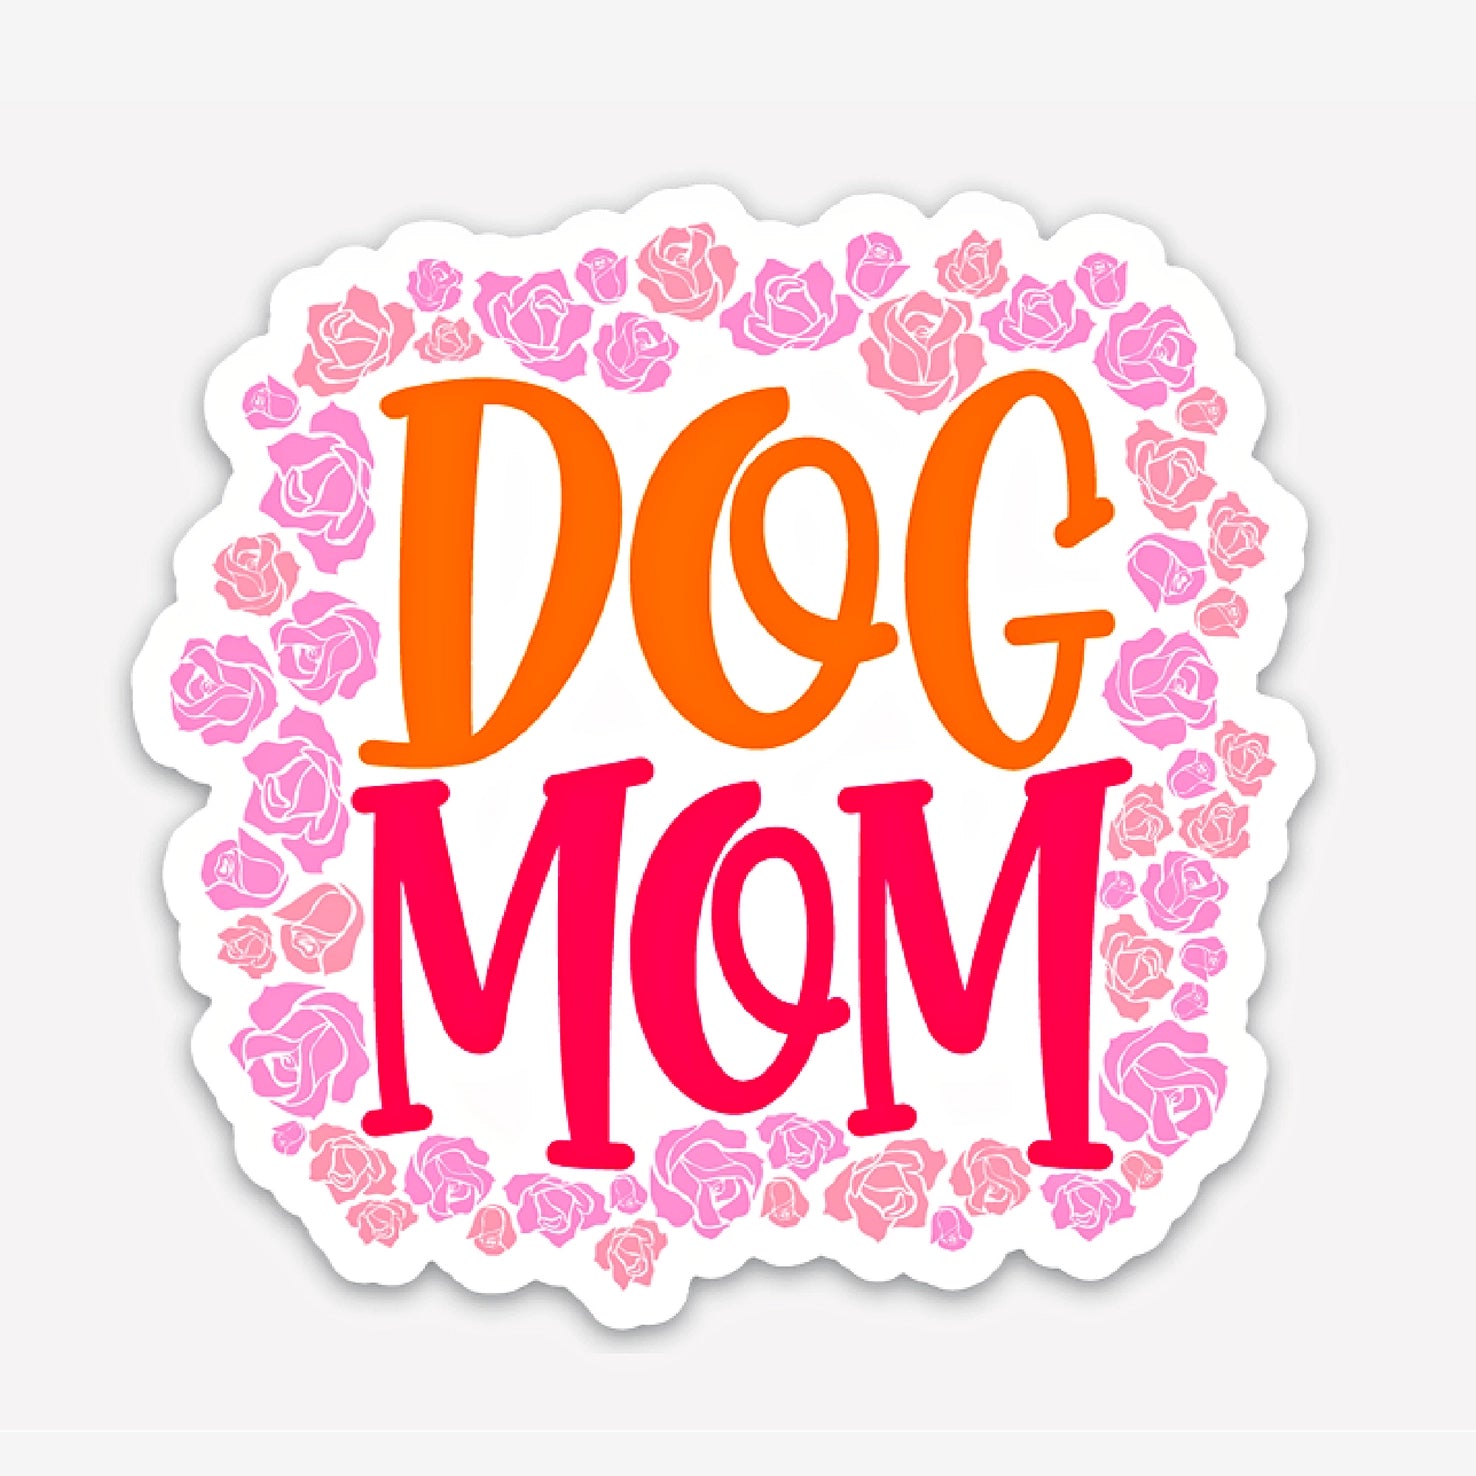 Sticker Dog Mom Pink Roses